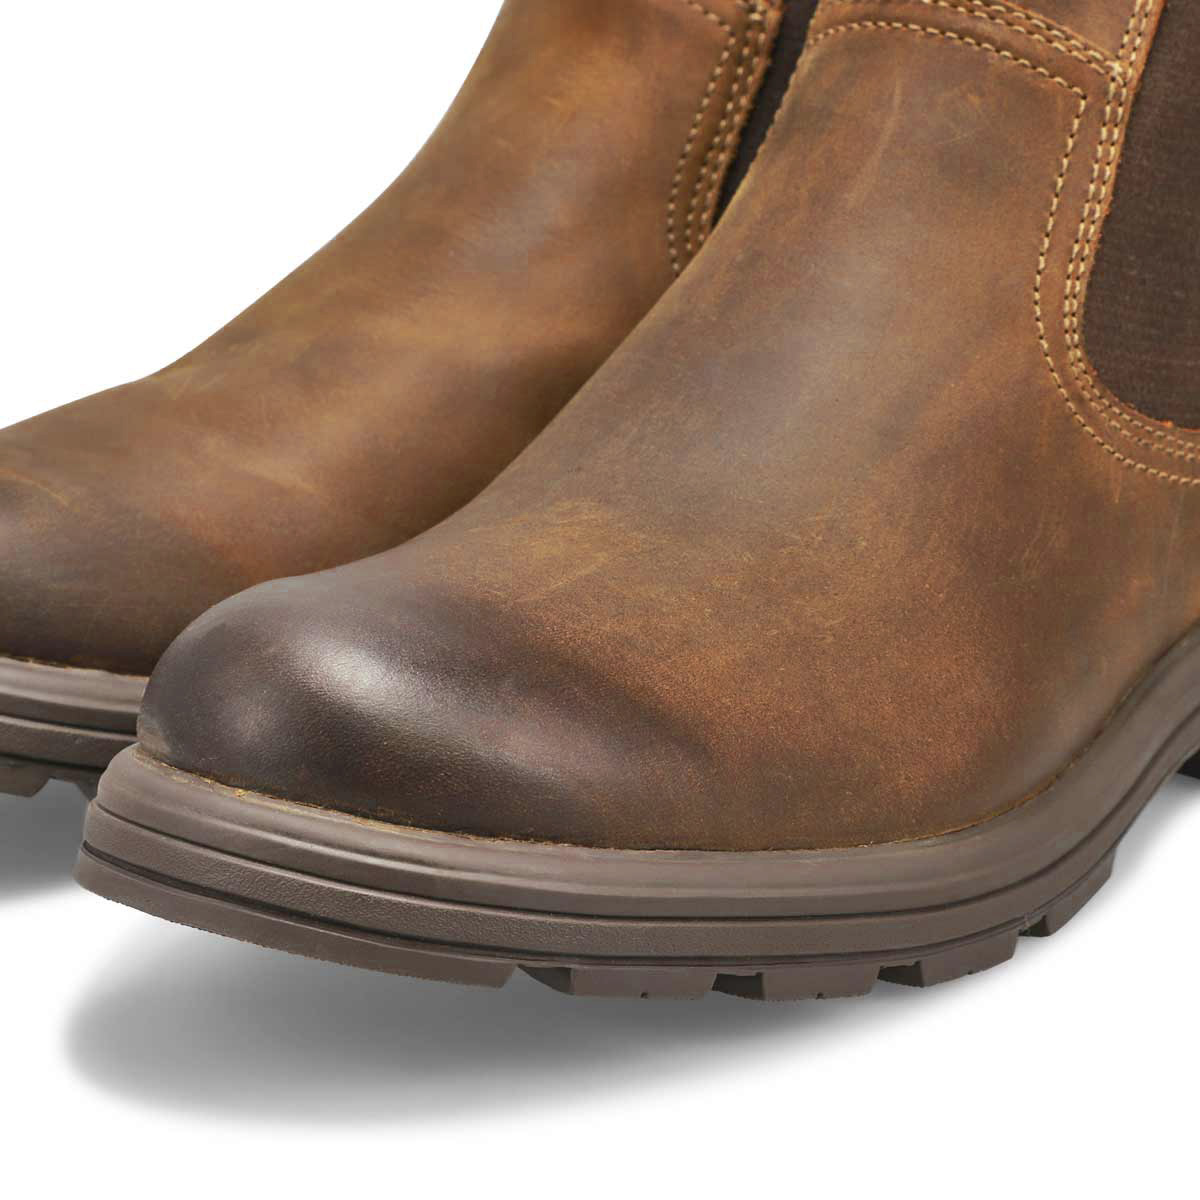 Men's Biltmore Waterproof Chelsea Boot - Oak